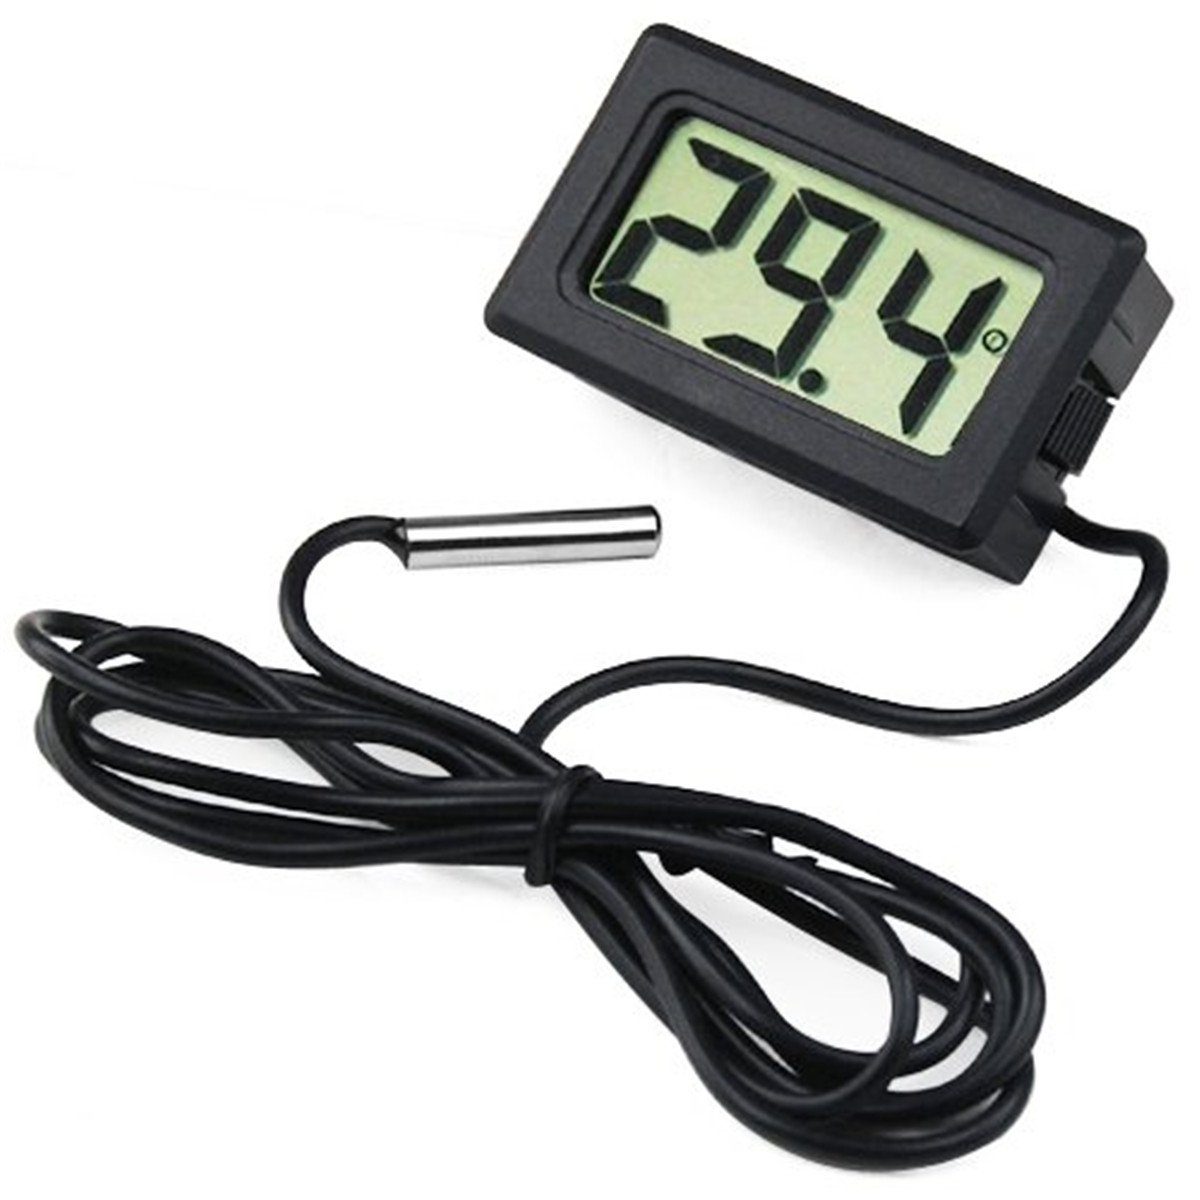 Olotos Акваріумний термометр Digital Термометр Temperatur Messgerät LCD Anzeige mit Fühler 1-5m